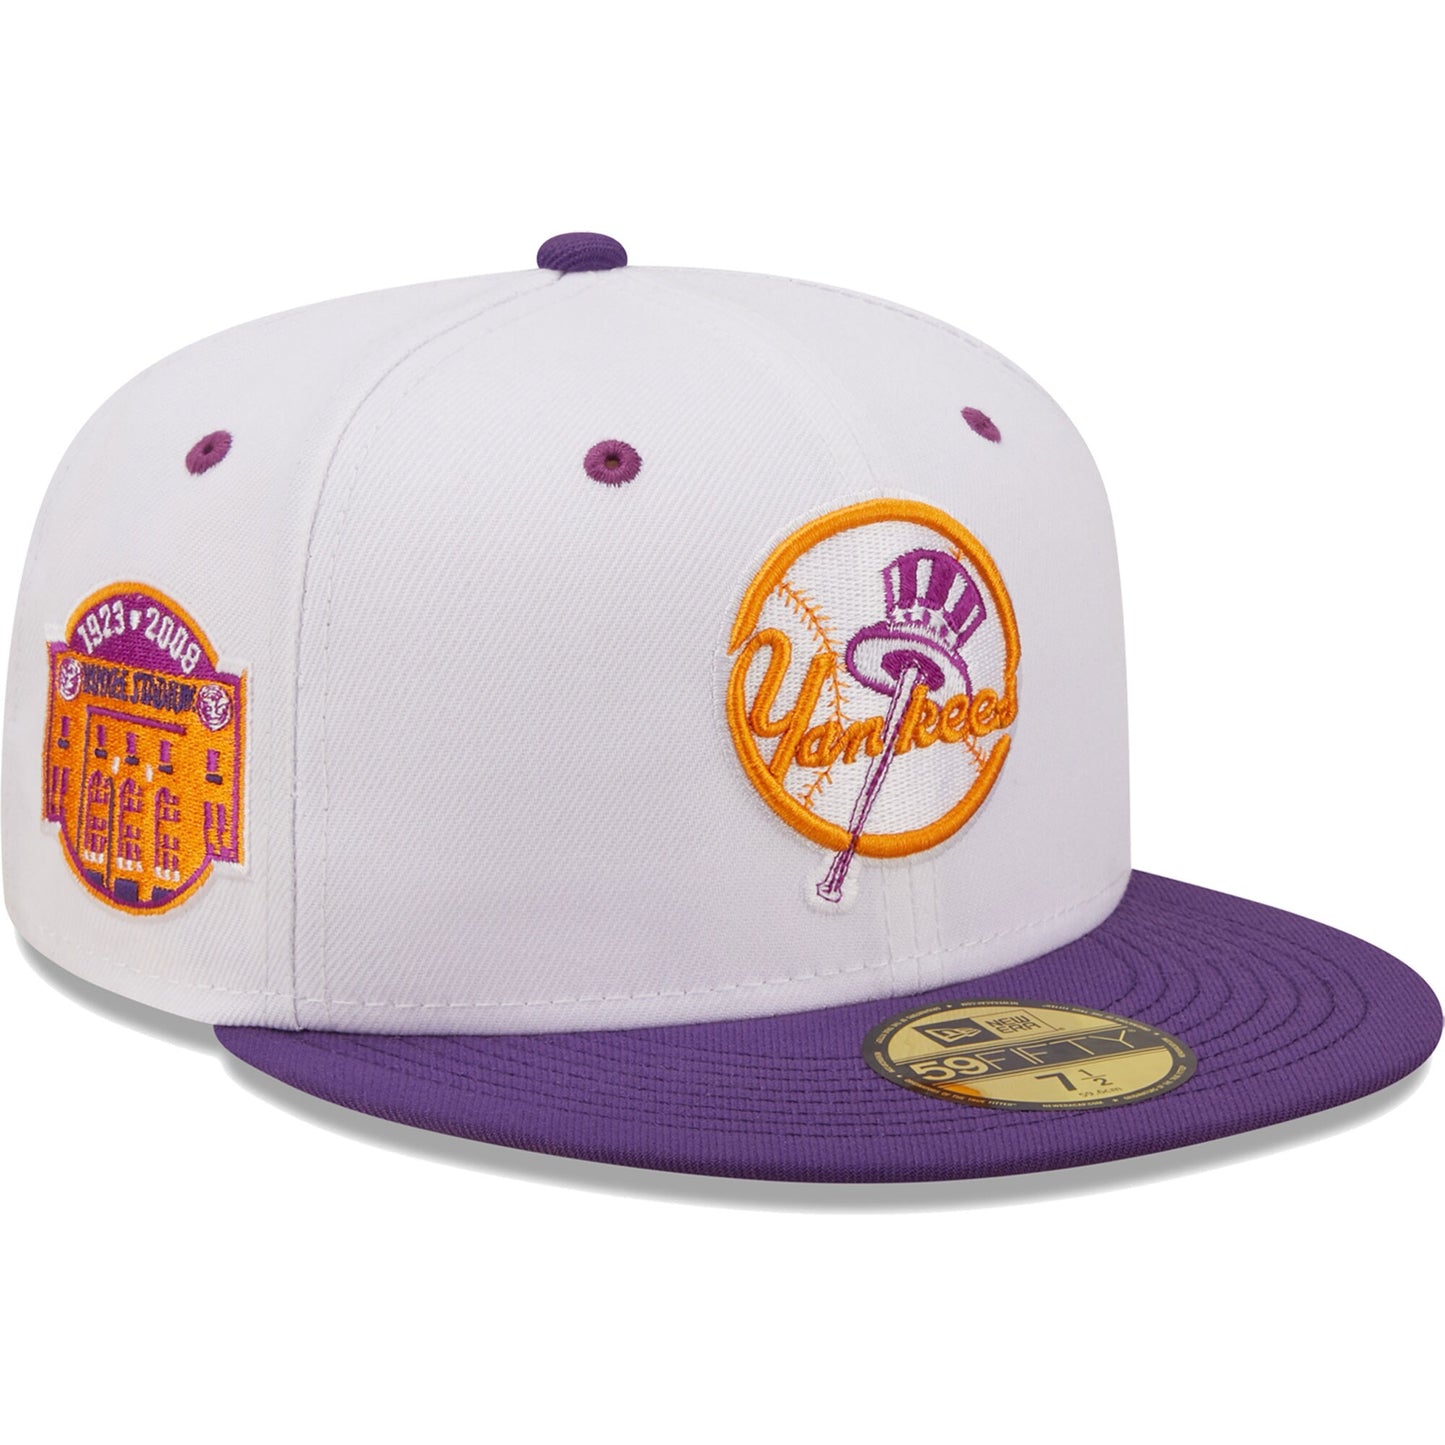 New York Yankees New Era Final Season at the Original Yankee Stadium Grape Lolli 59FIFTY Fitted Hat - White/Purple